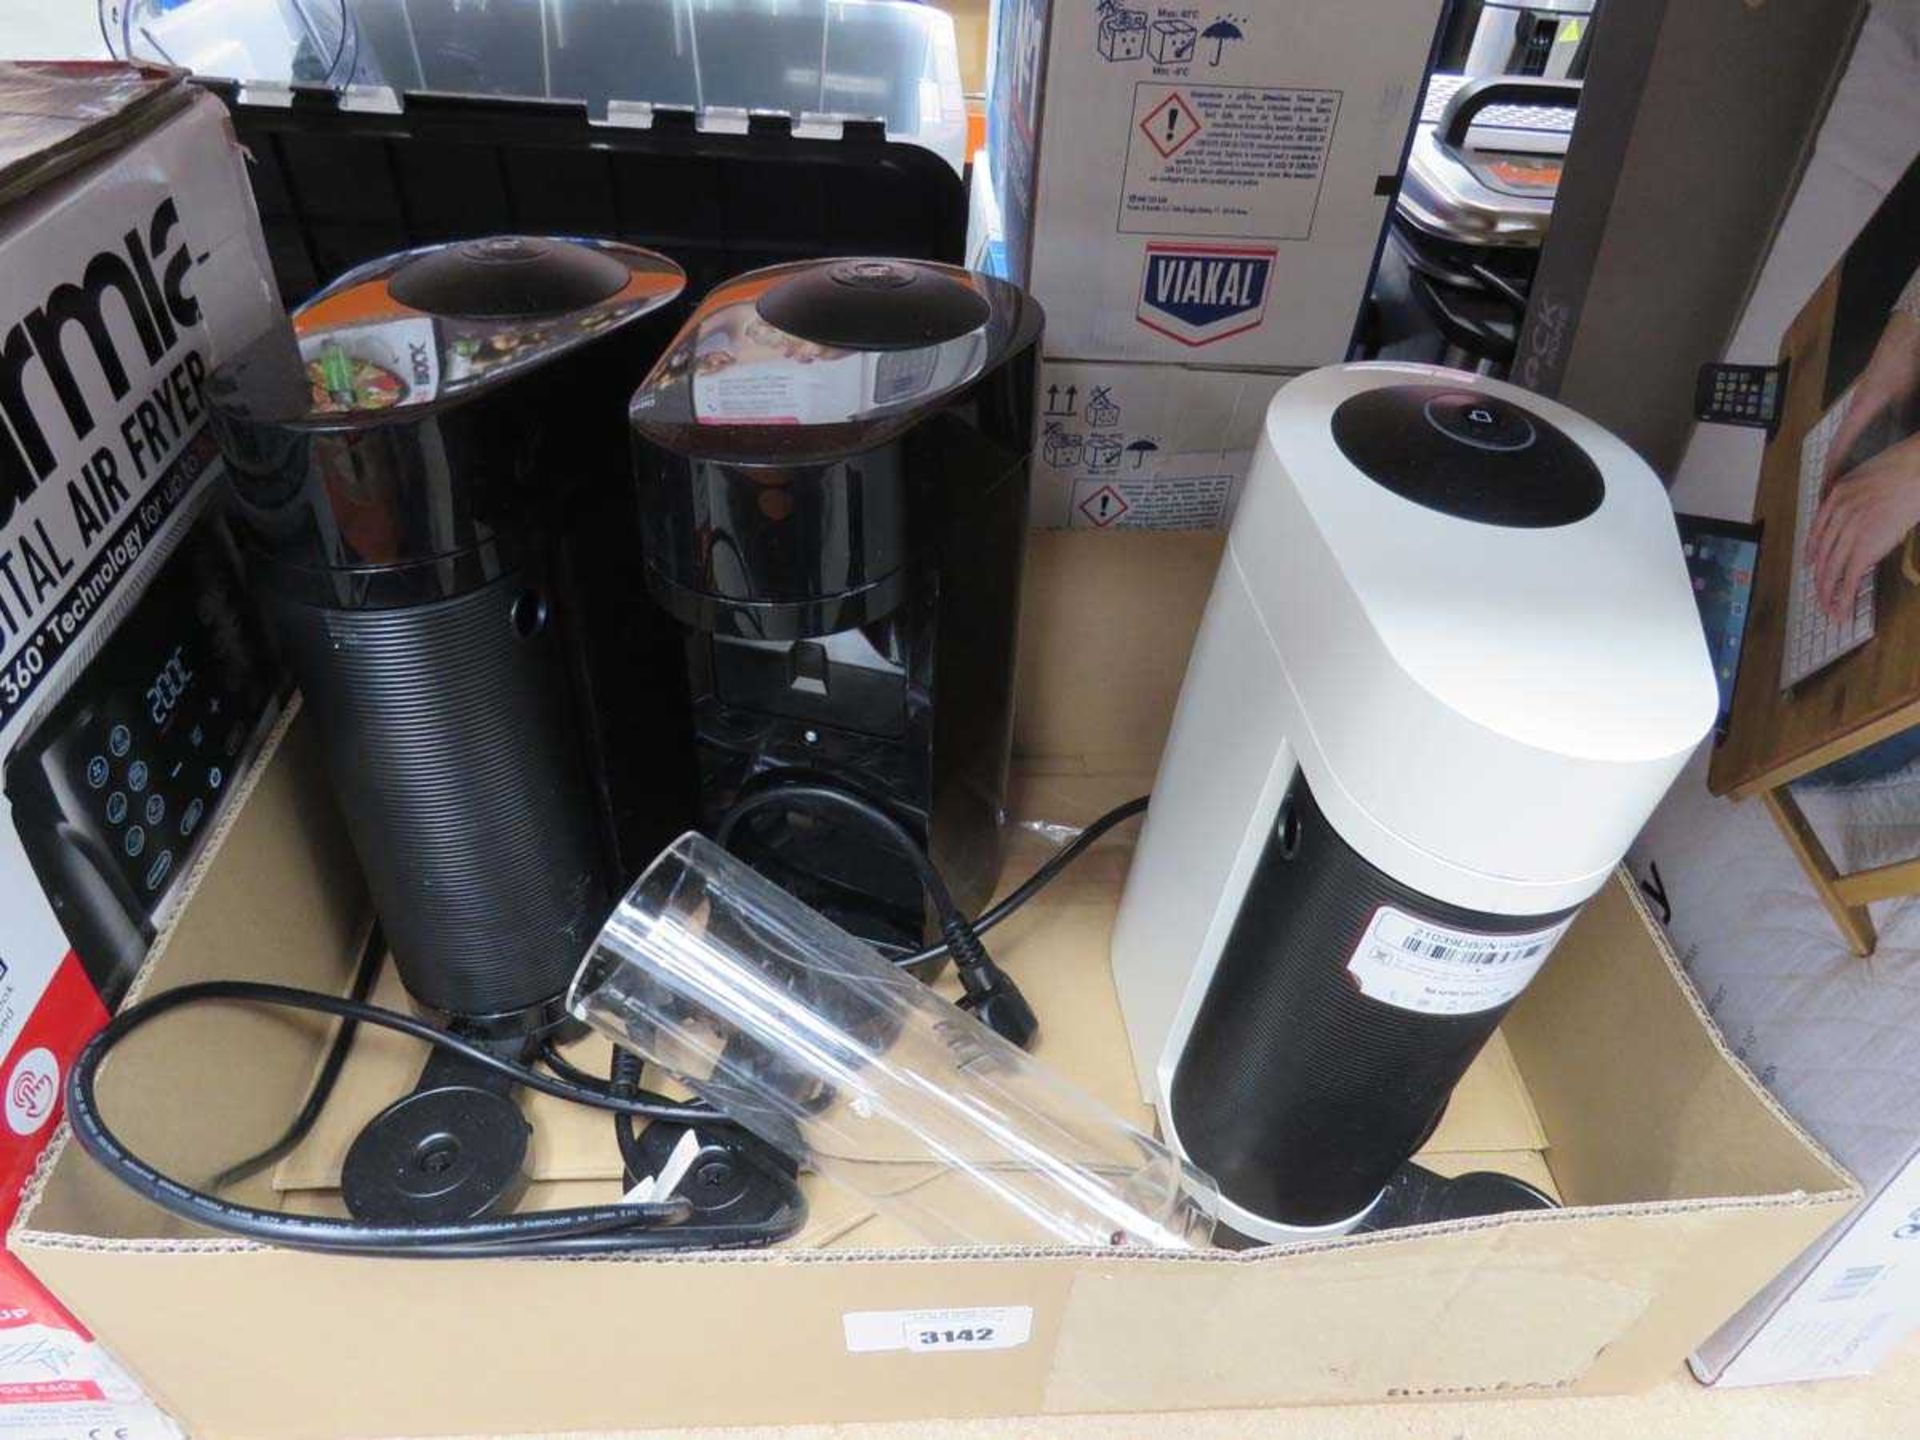 +VAT Tray containing 3 unboxed Nespresso coffee machine